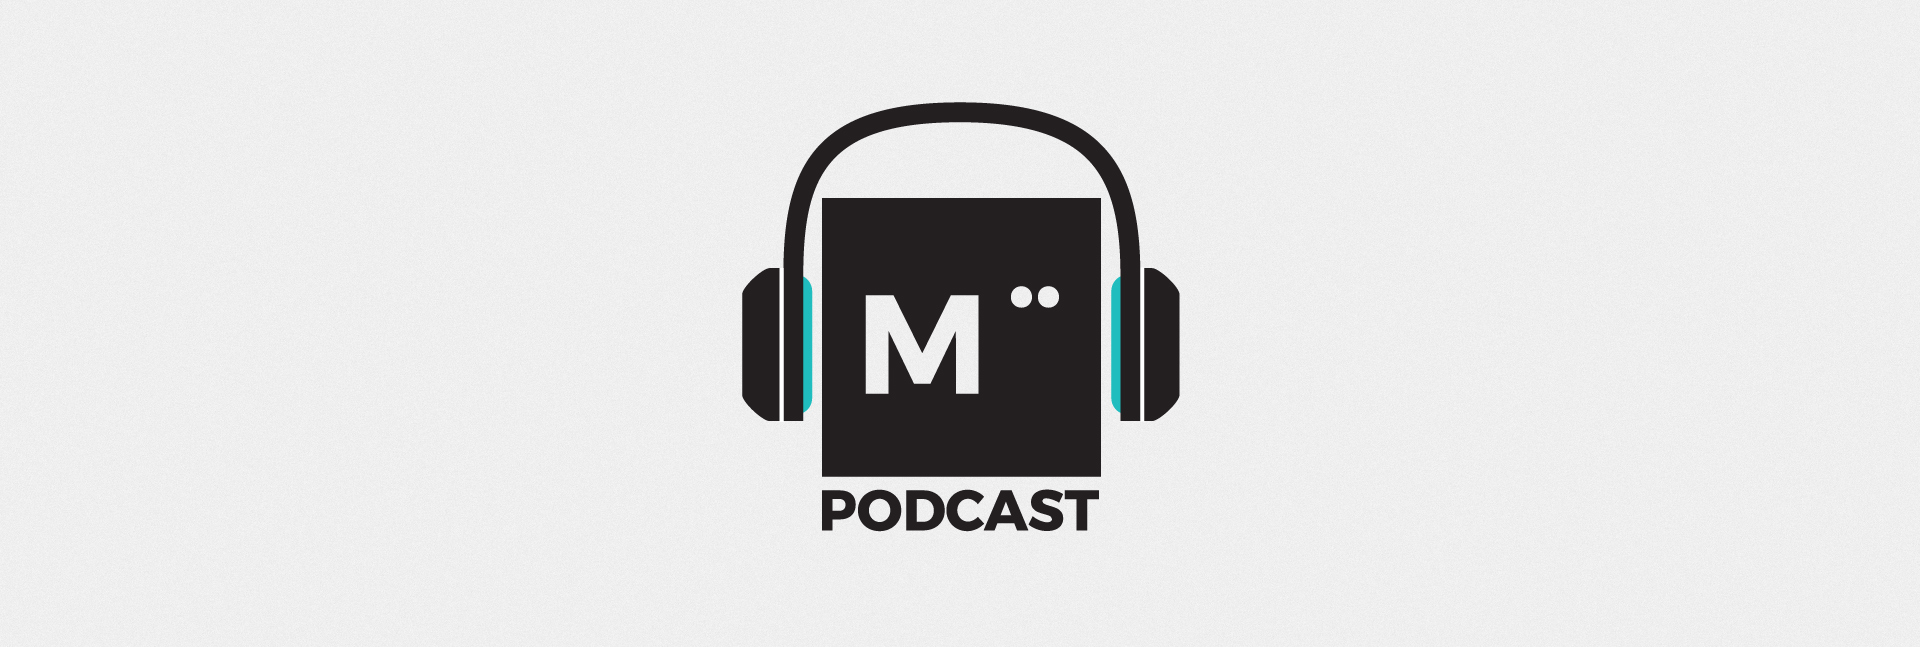 Podcast-3